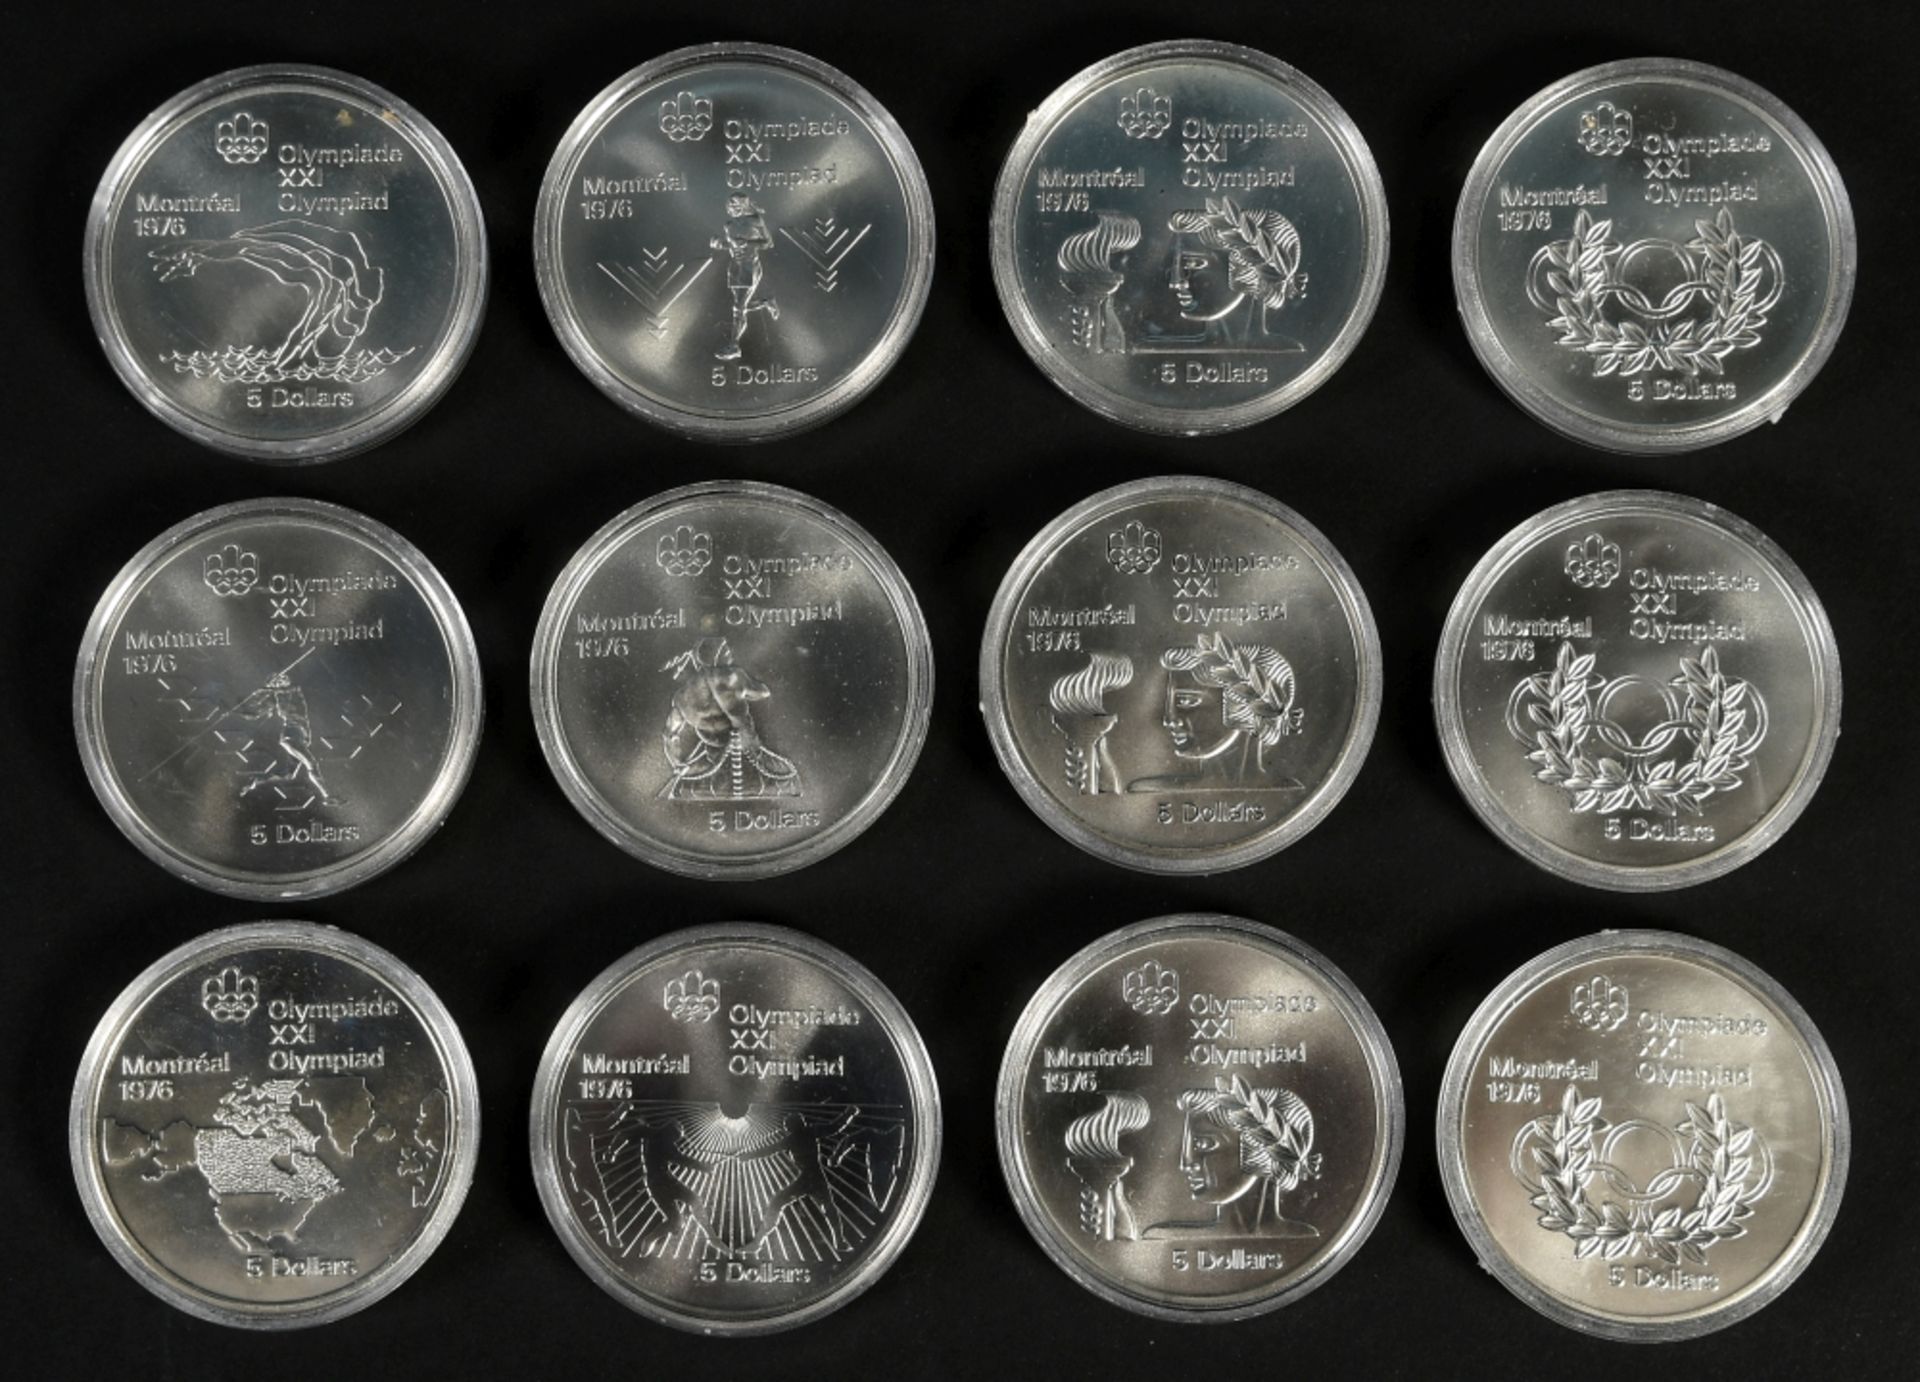 Münzen, 12 Stück - Silbermünzen "5 Dollar Olympiade XXI, Montreal 1976"